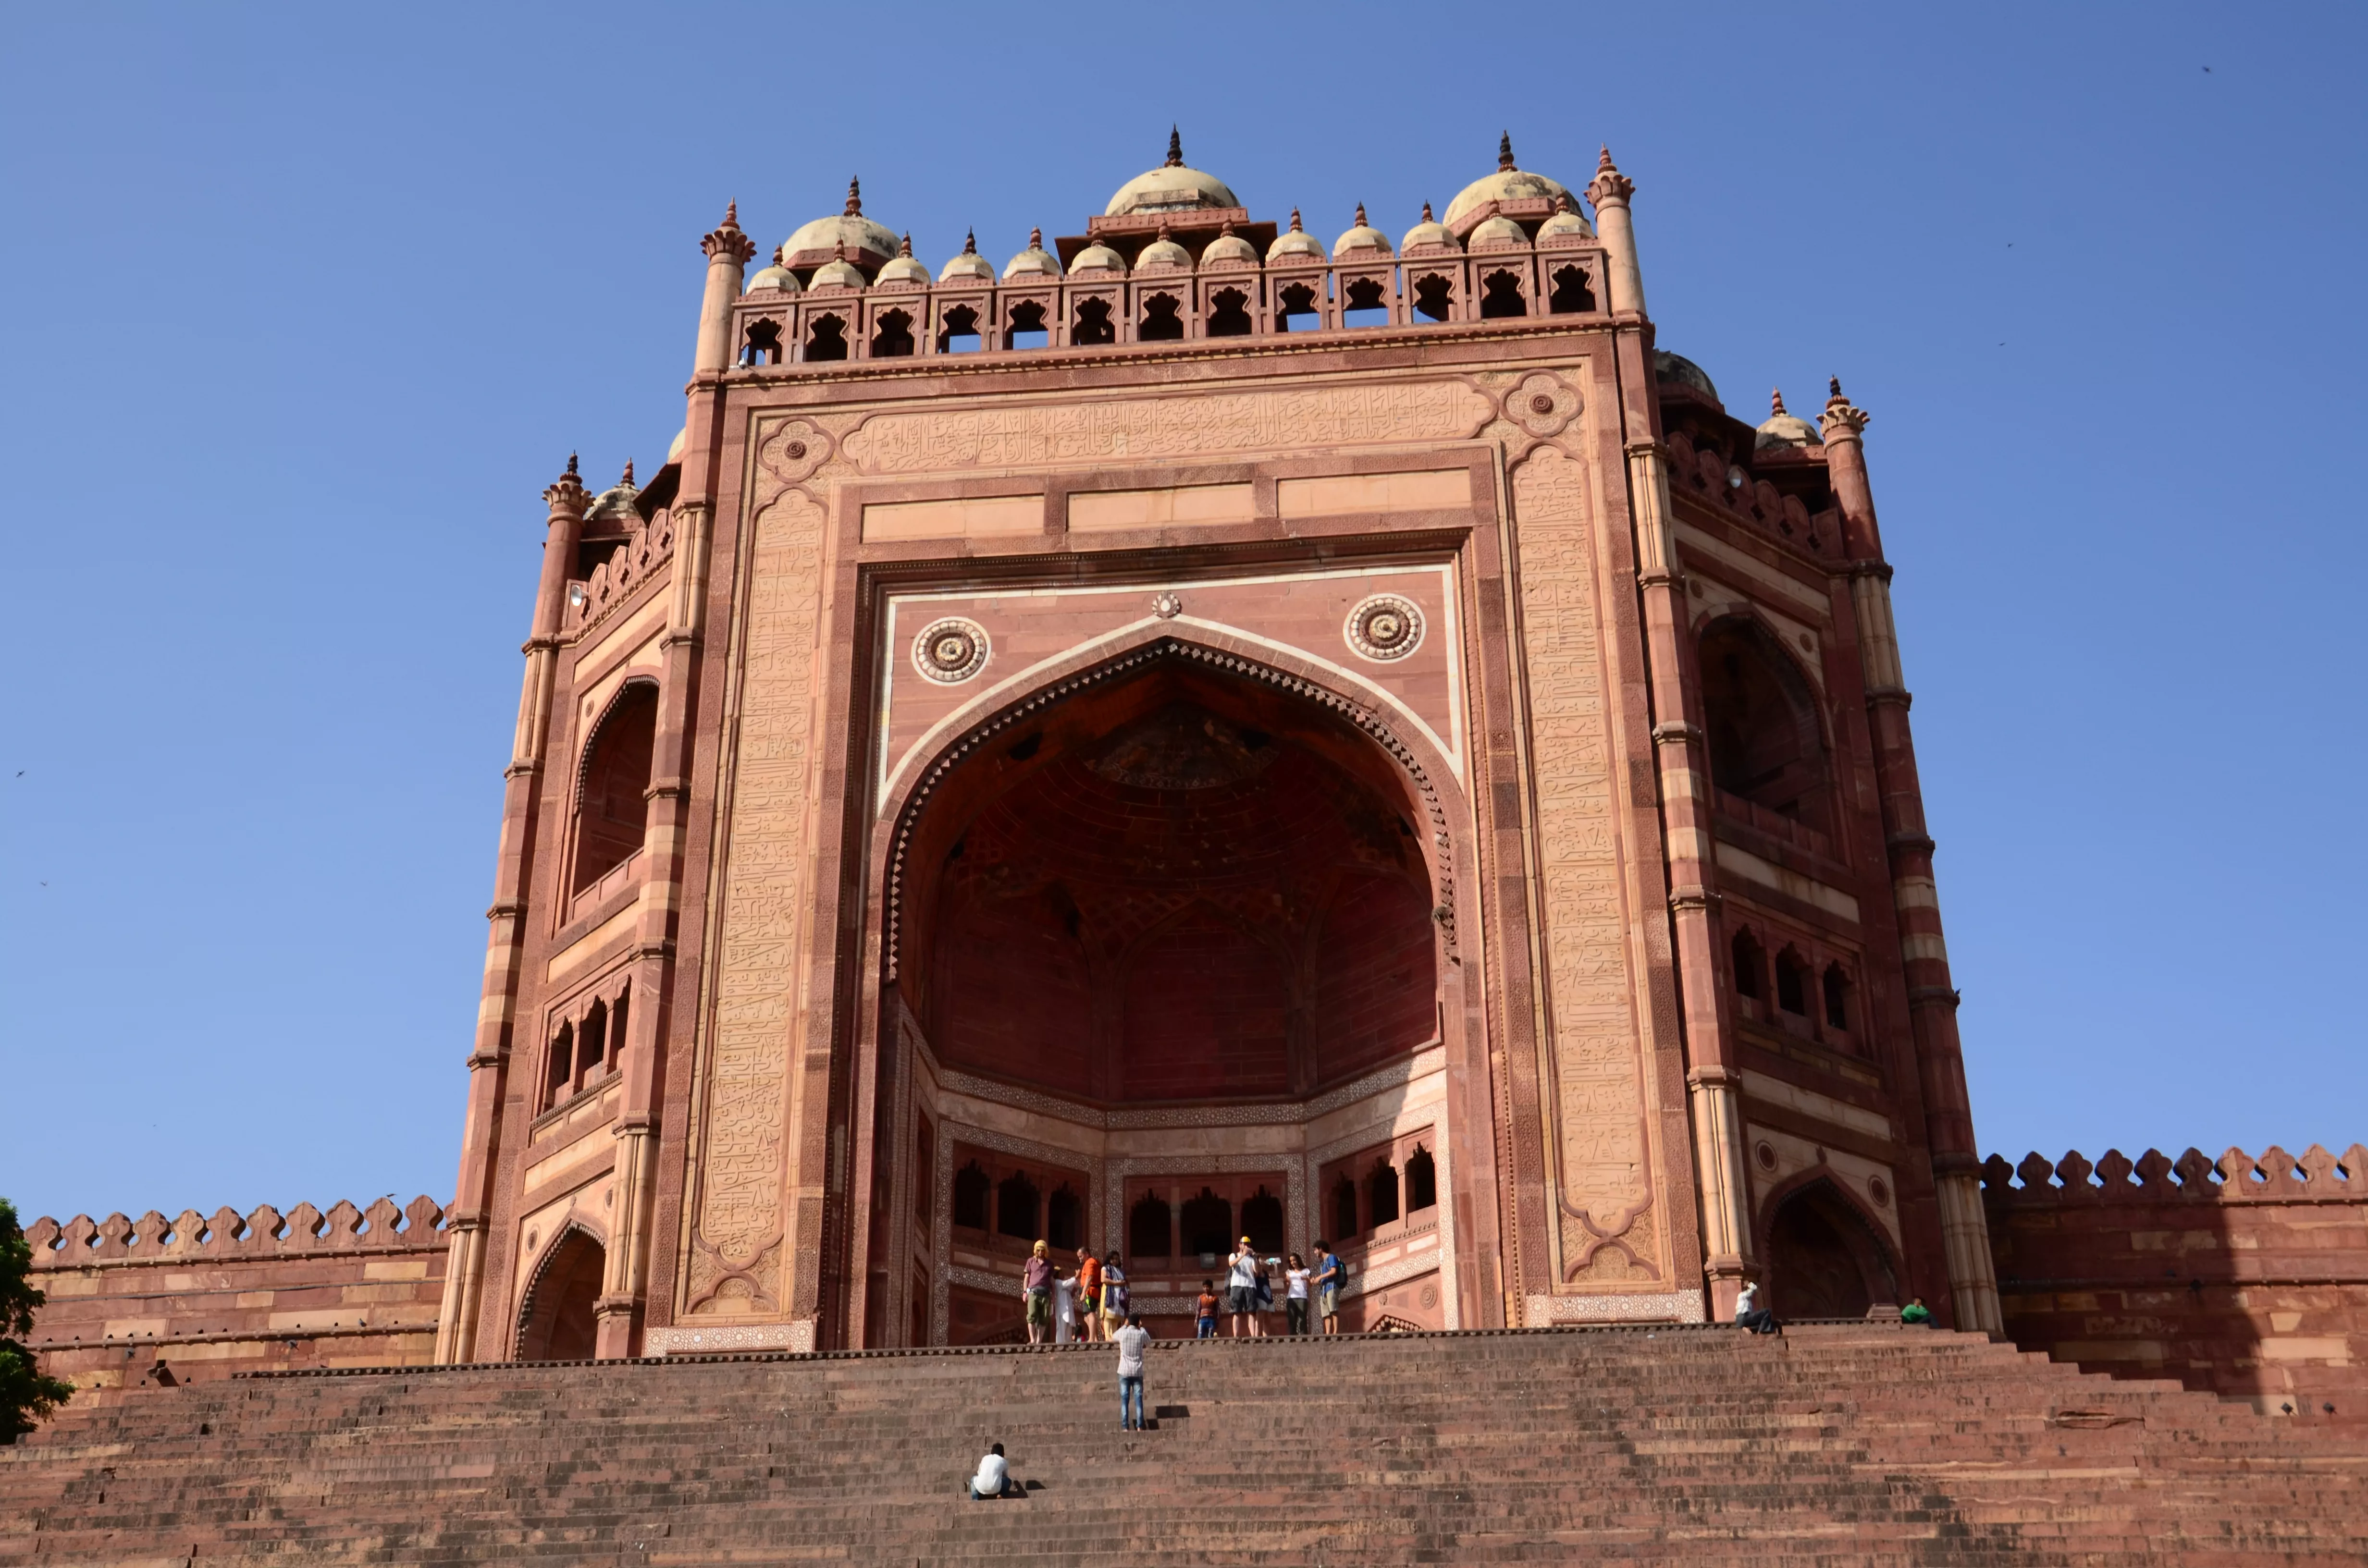 Delhi Darwaza in Pakistan, South Asia | Architecture - Rated 4